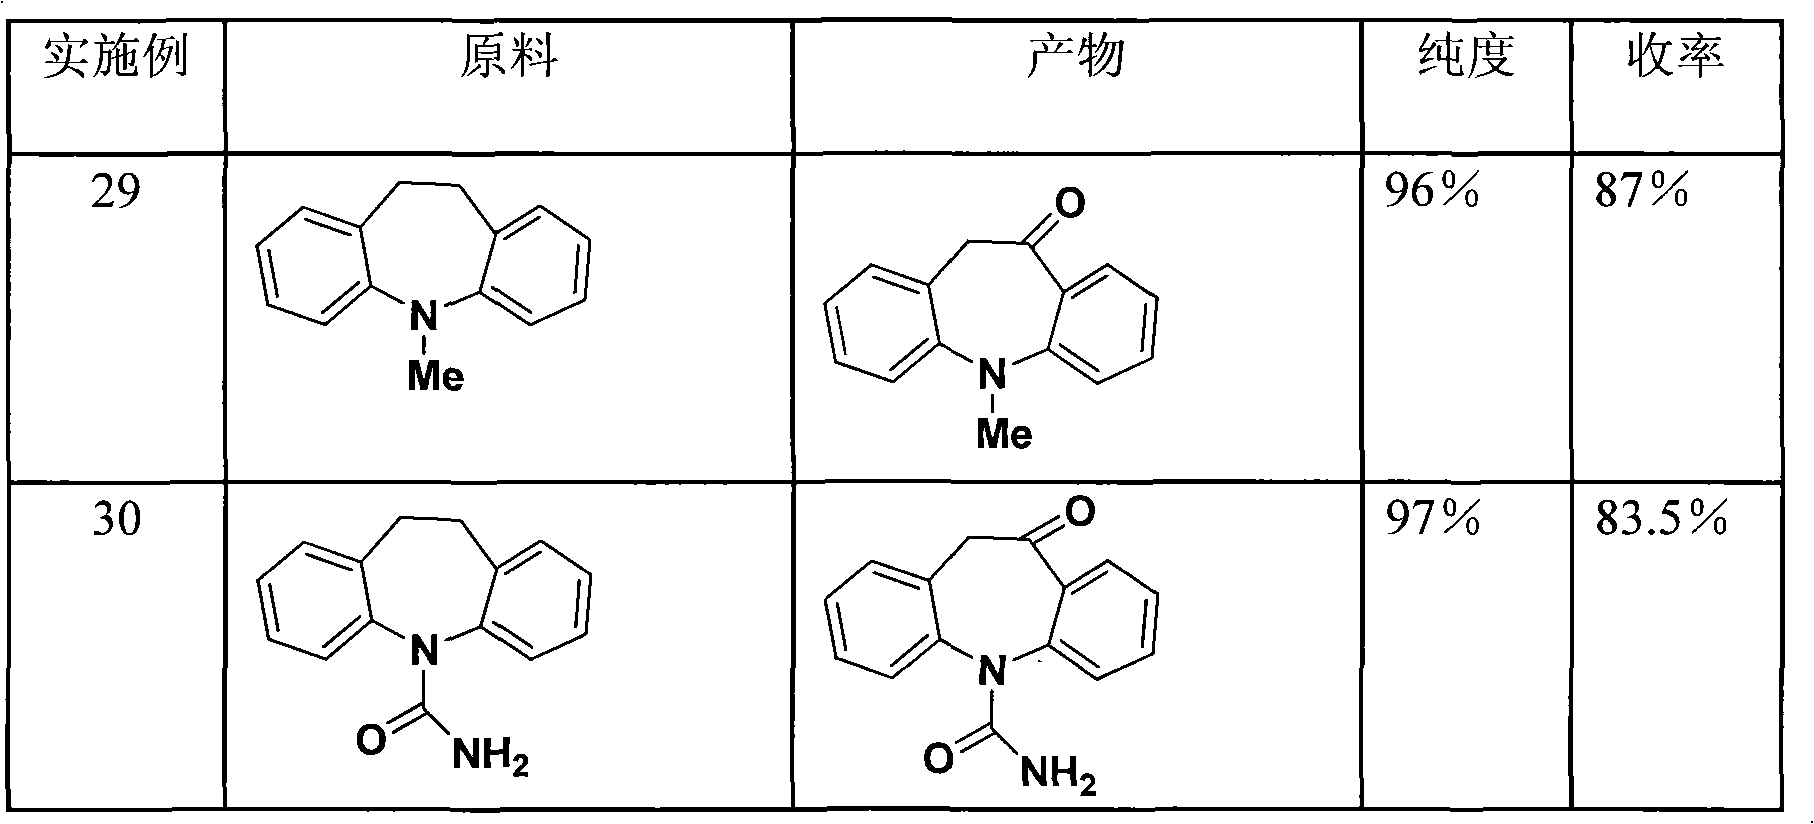 Synthesis method of 10-oxa-10,11-dihydro-5H-dibenzo(b,f) azepine